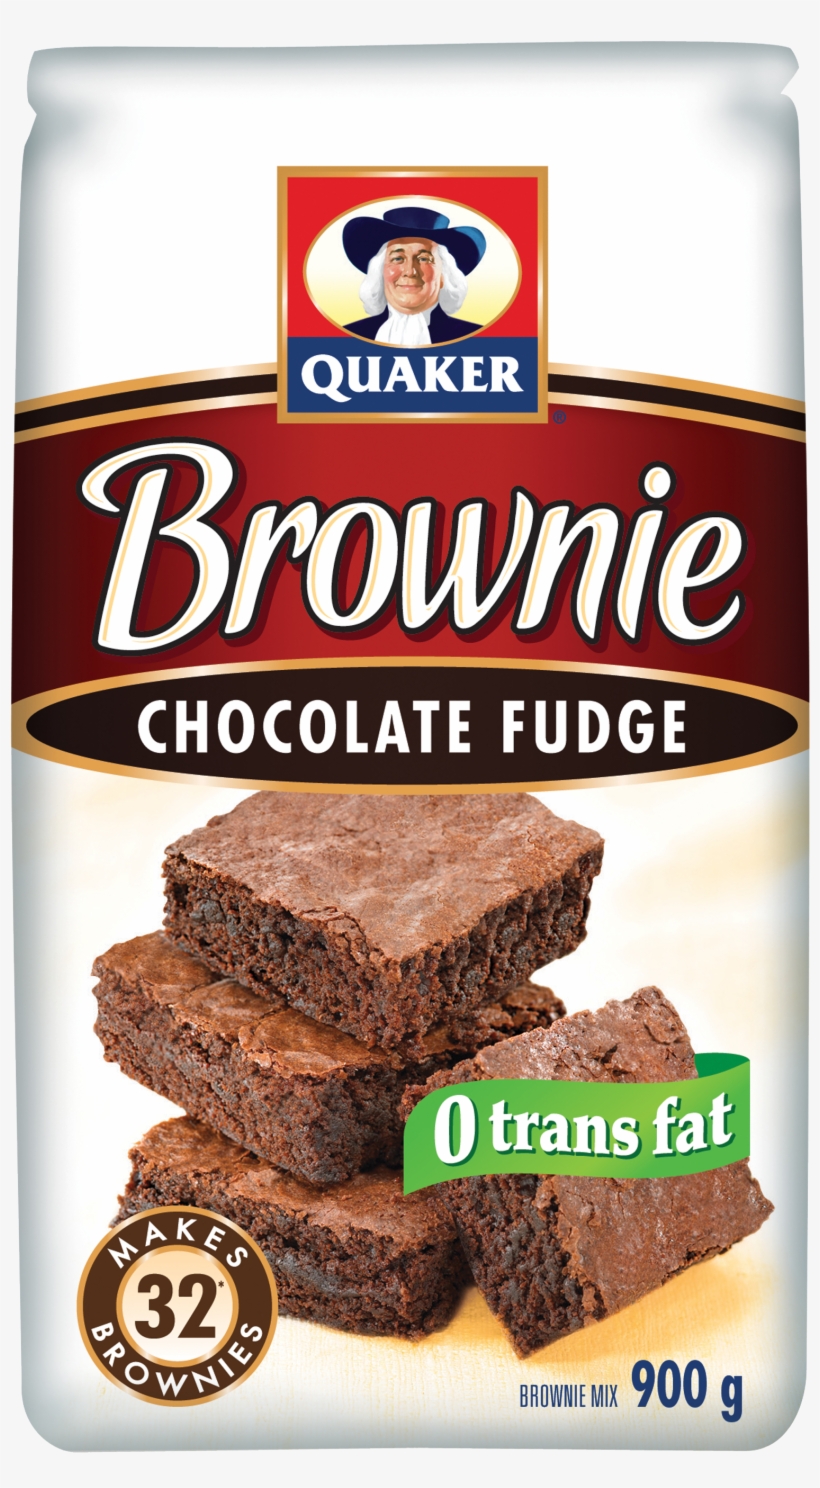 Quaker® Chocolate Fudge Brownie Mix - Oatmeal Chocolate Chip Muffin Mix, transparent png #1972778